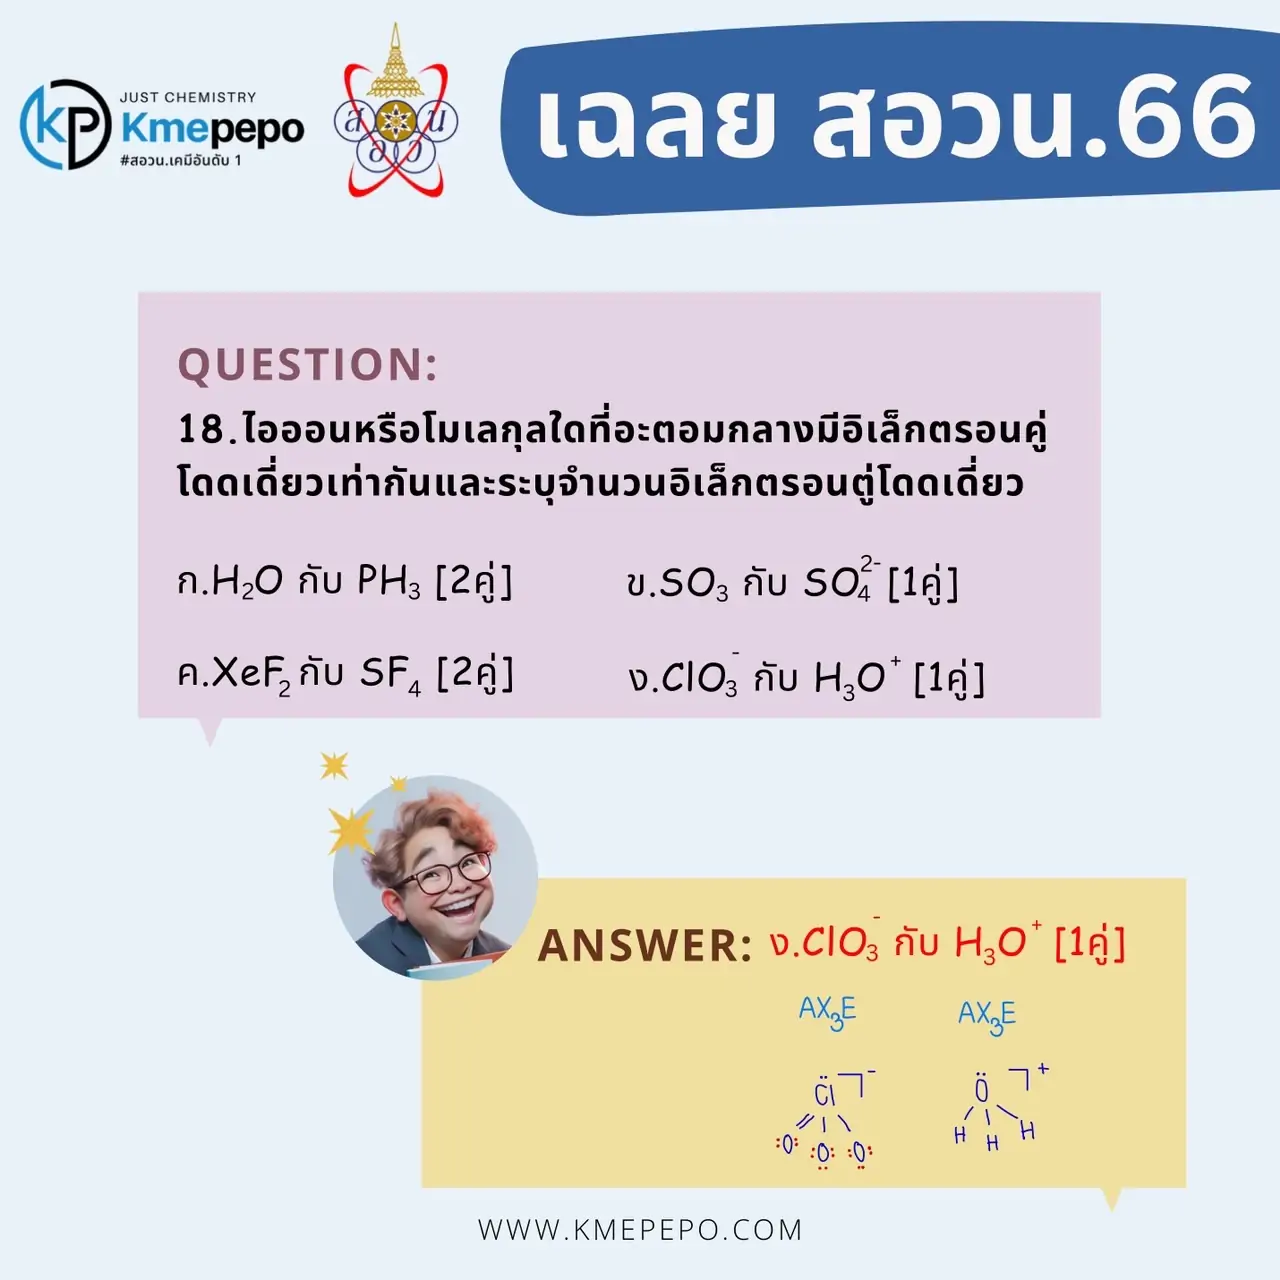 kmepepo exam answer 3